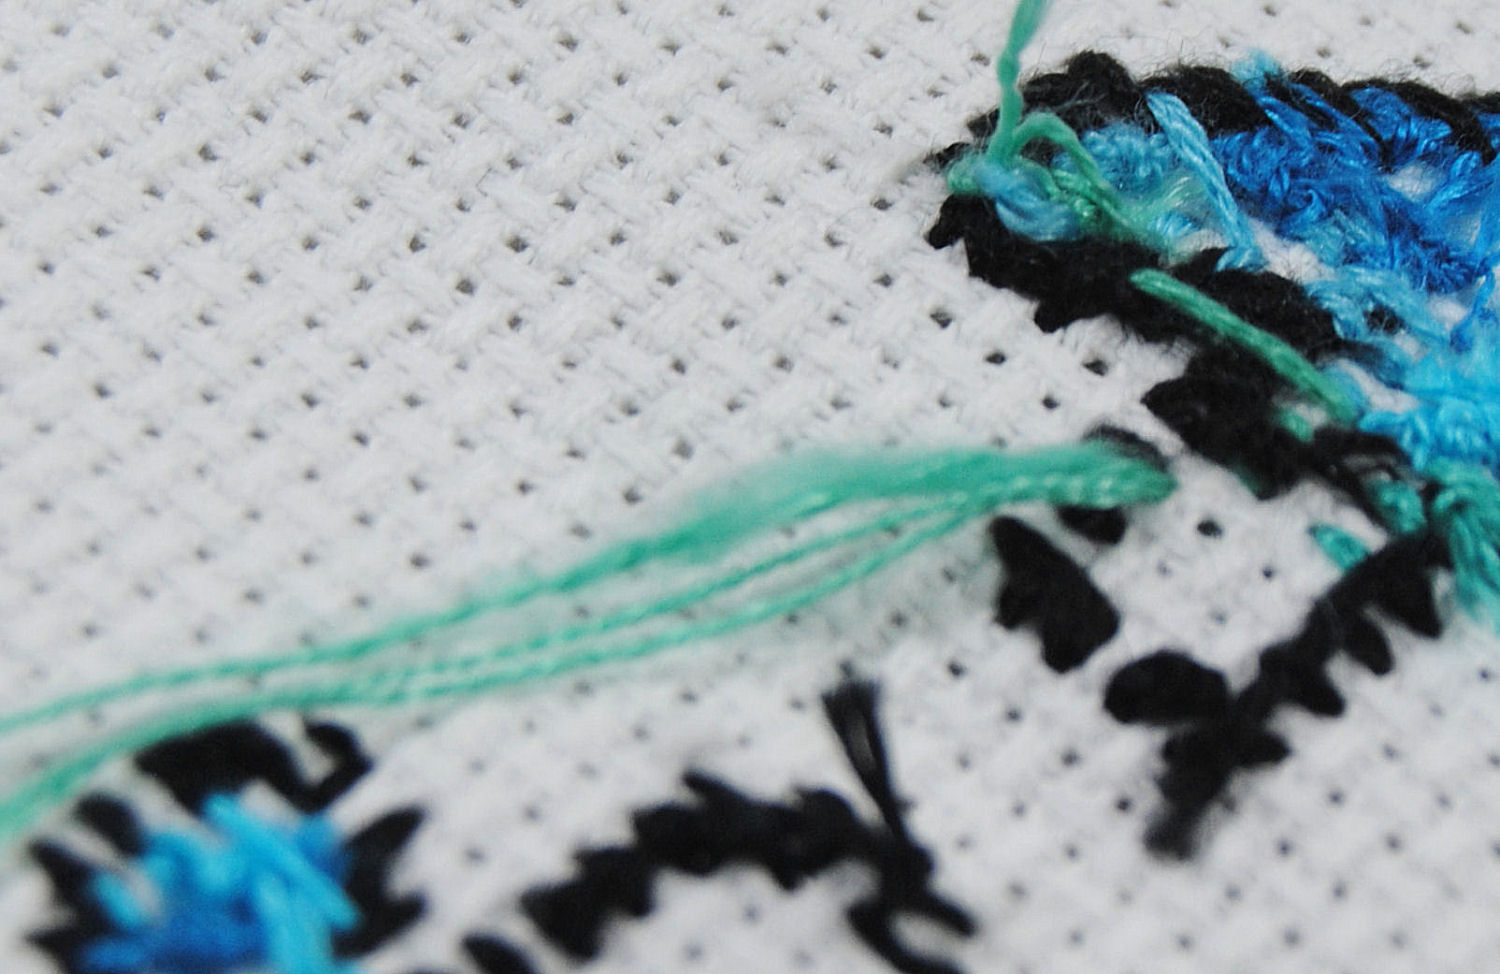 Big Eye Needle Hand Sewing Needle Cross Stitch Needle - Temu